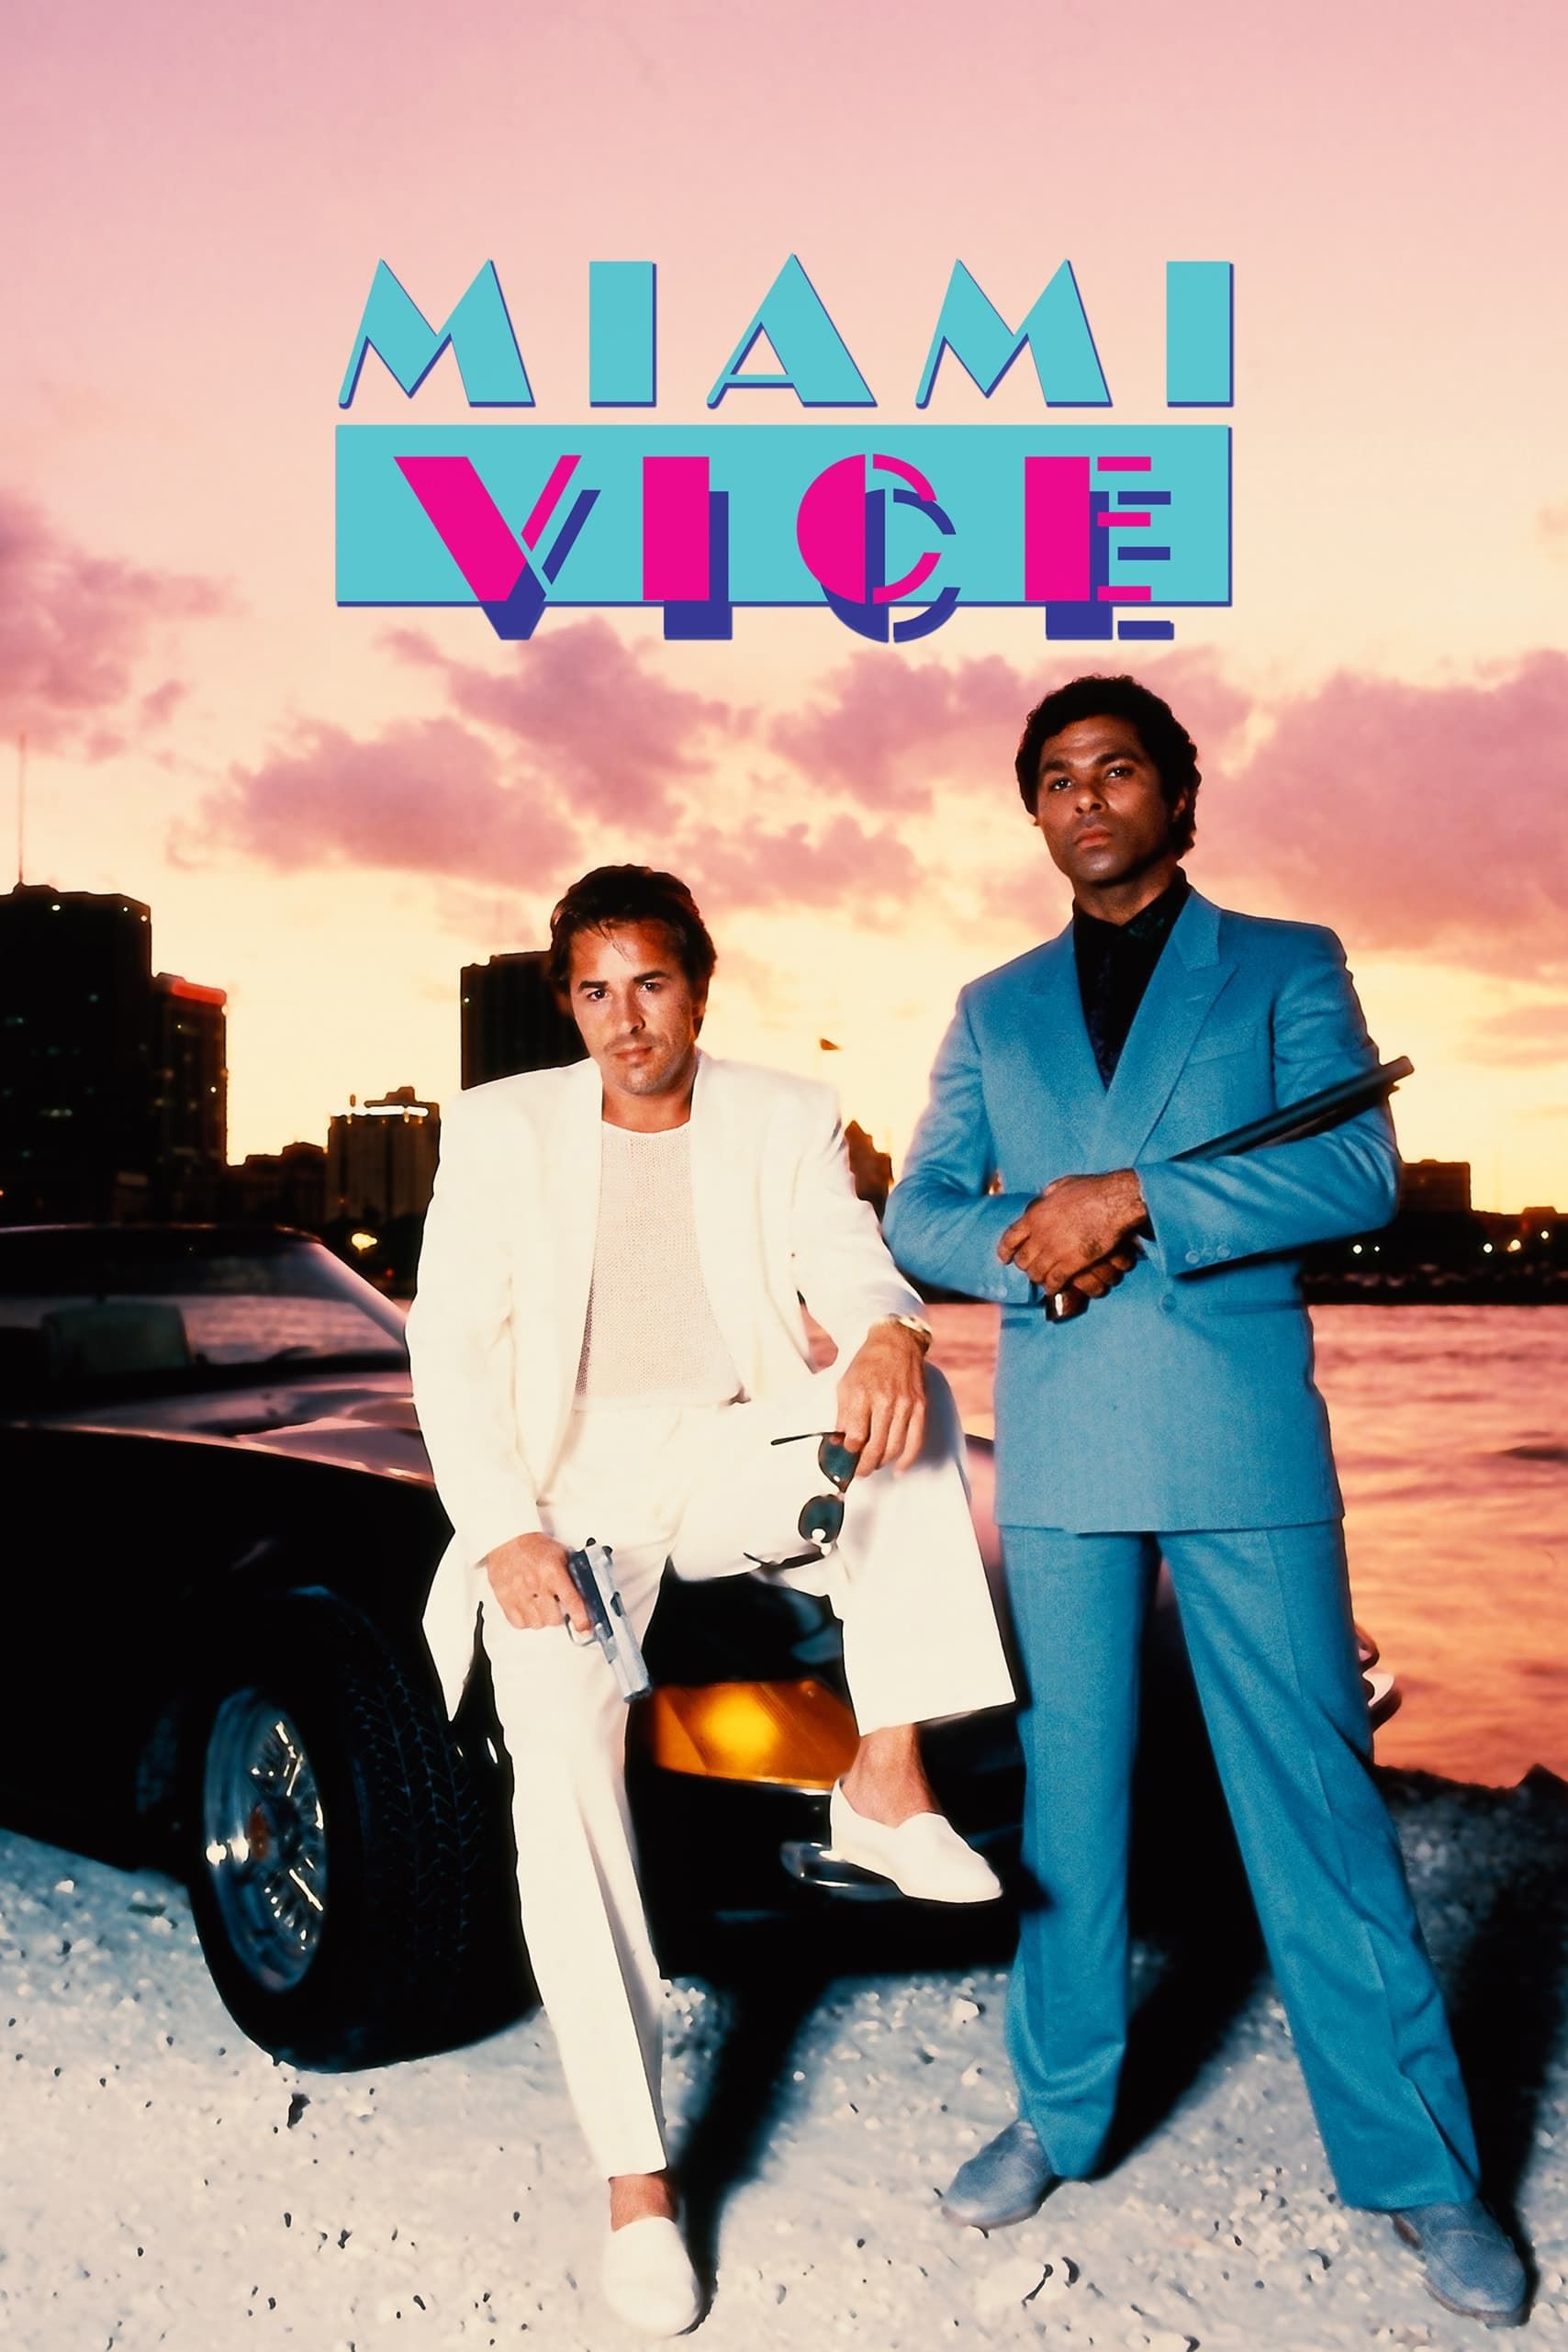 Watch Miami Vice Season 1